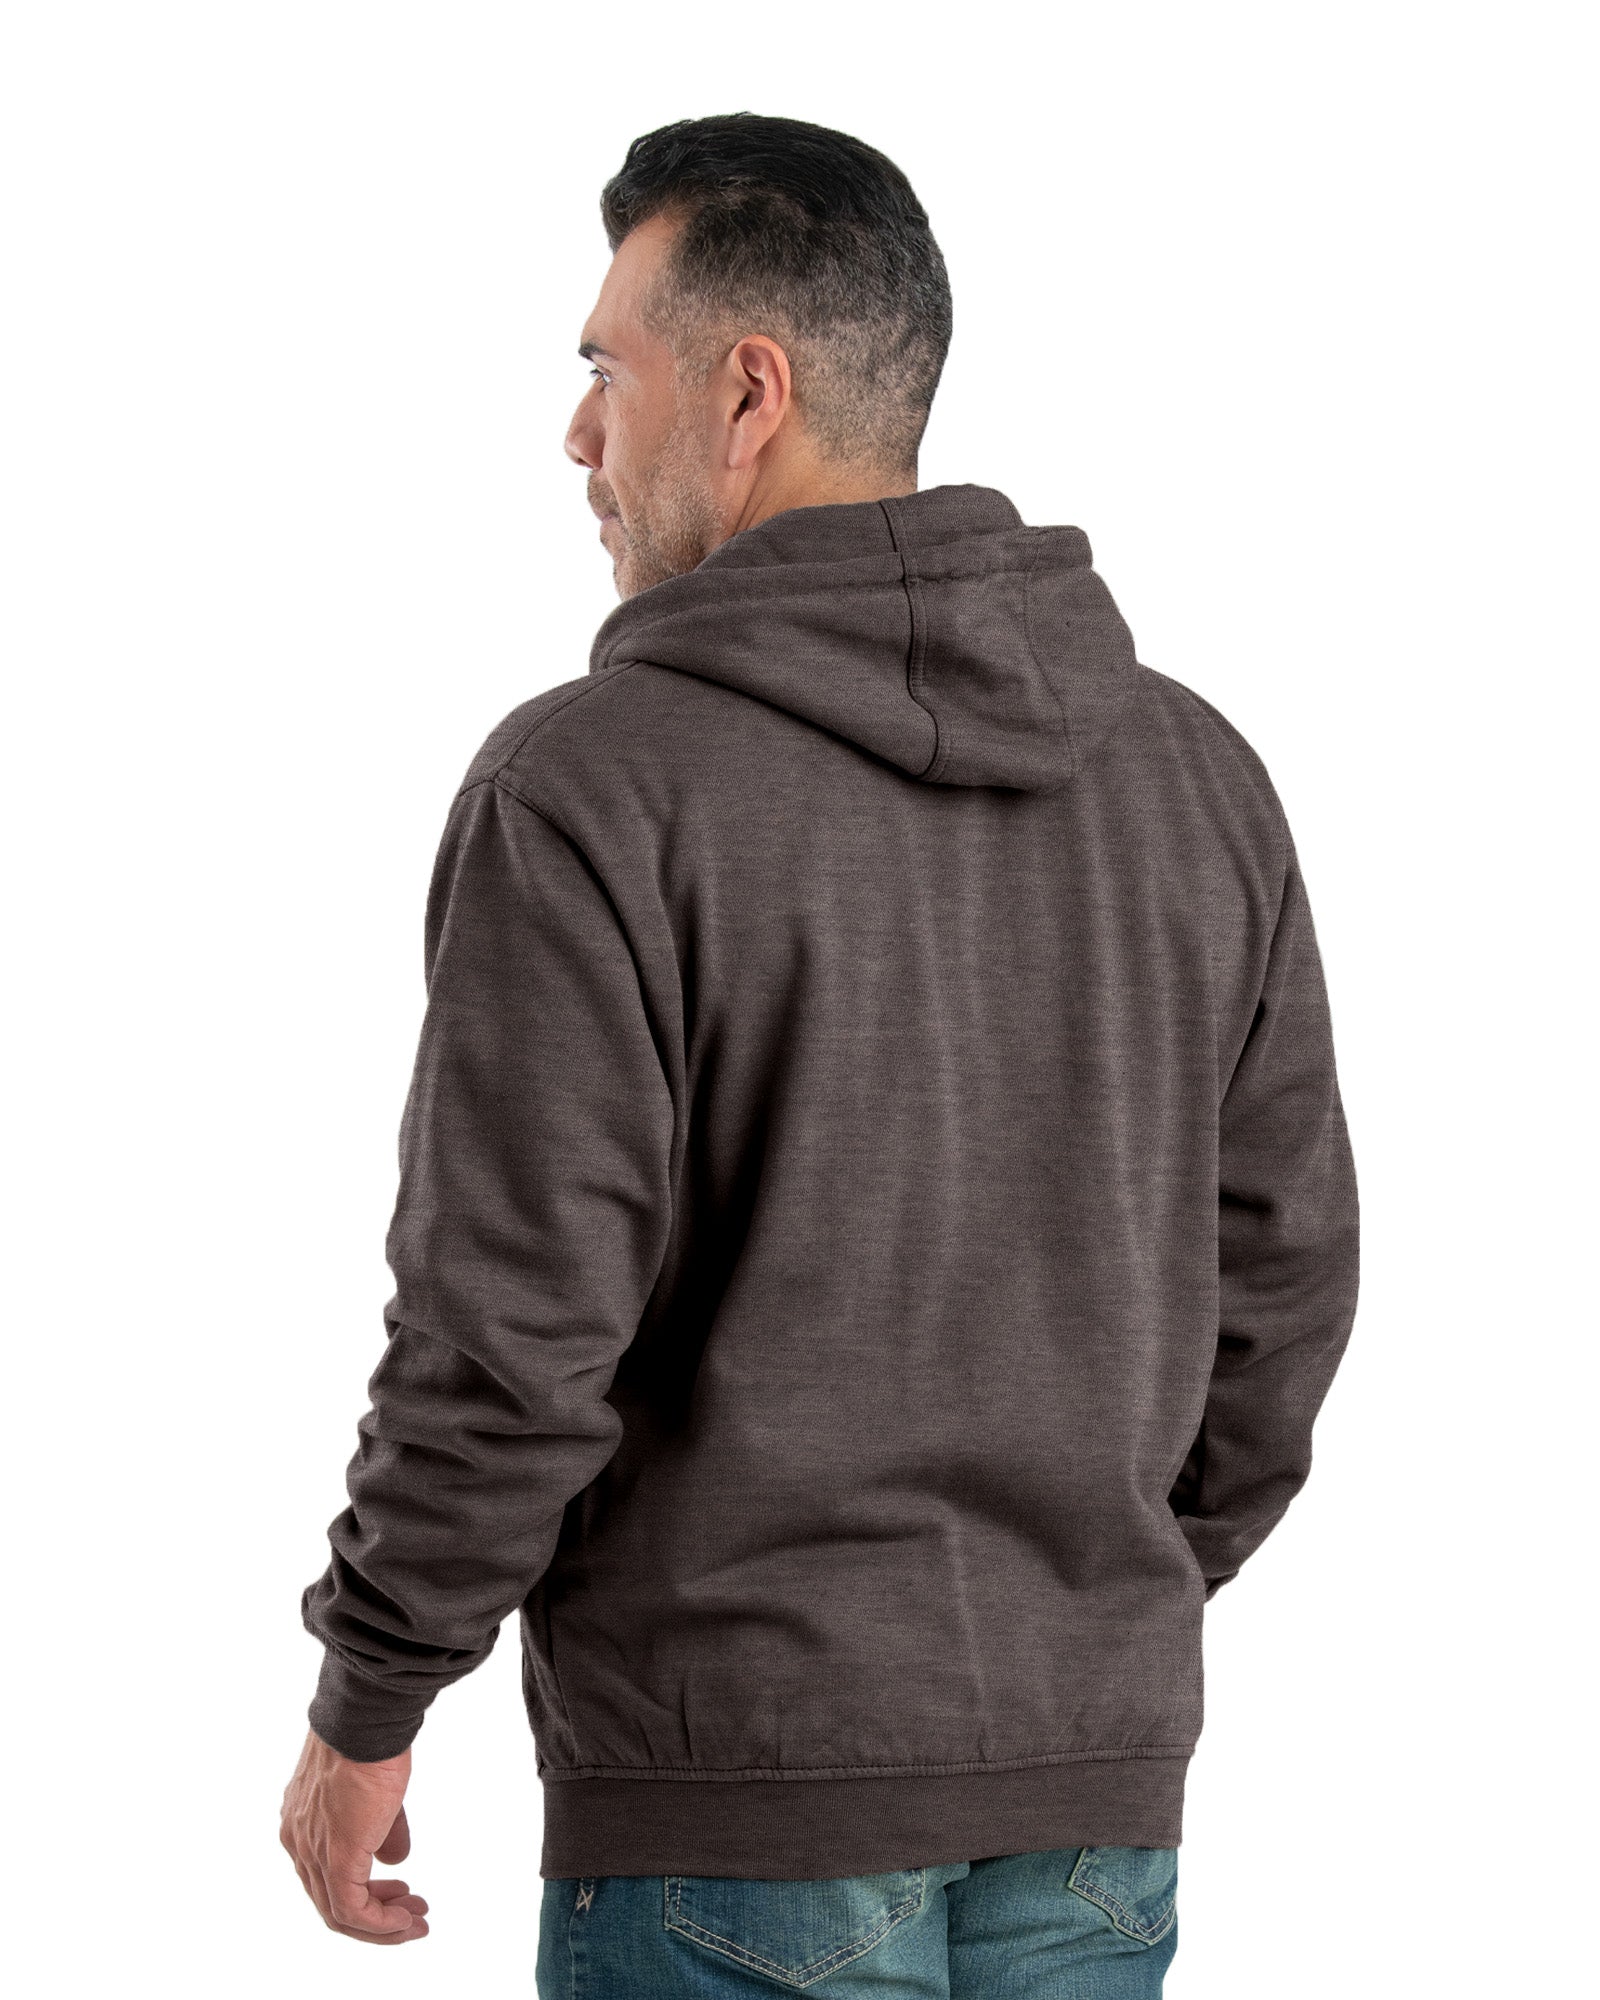 SZ101CH Heritage Thermal-Lined Full-Zip Hooded Sweatshirt